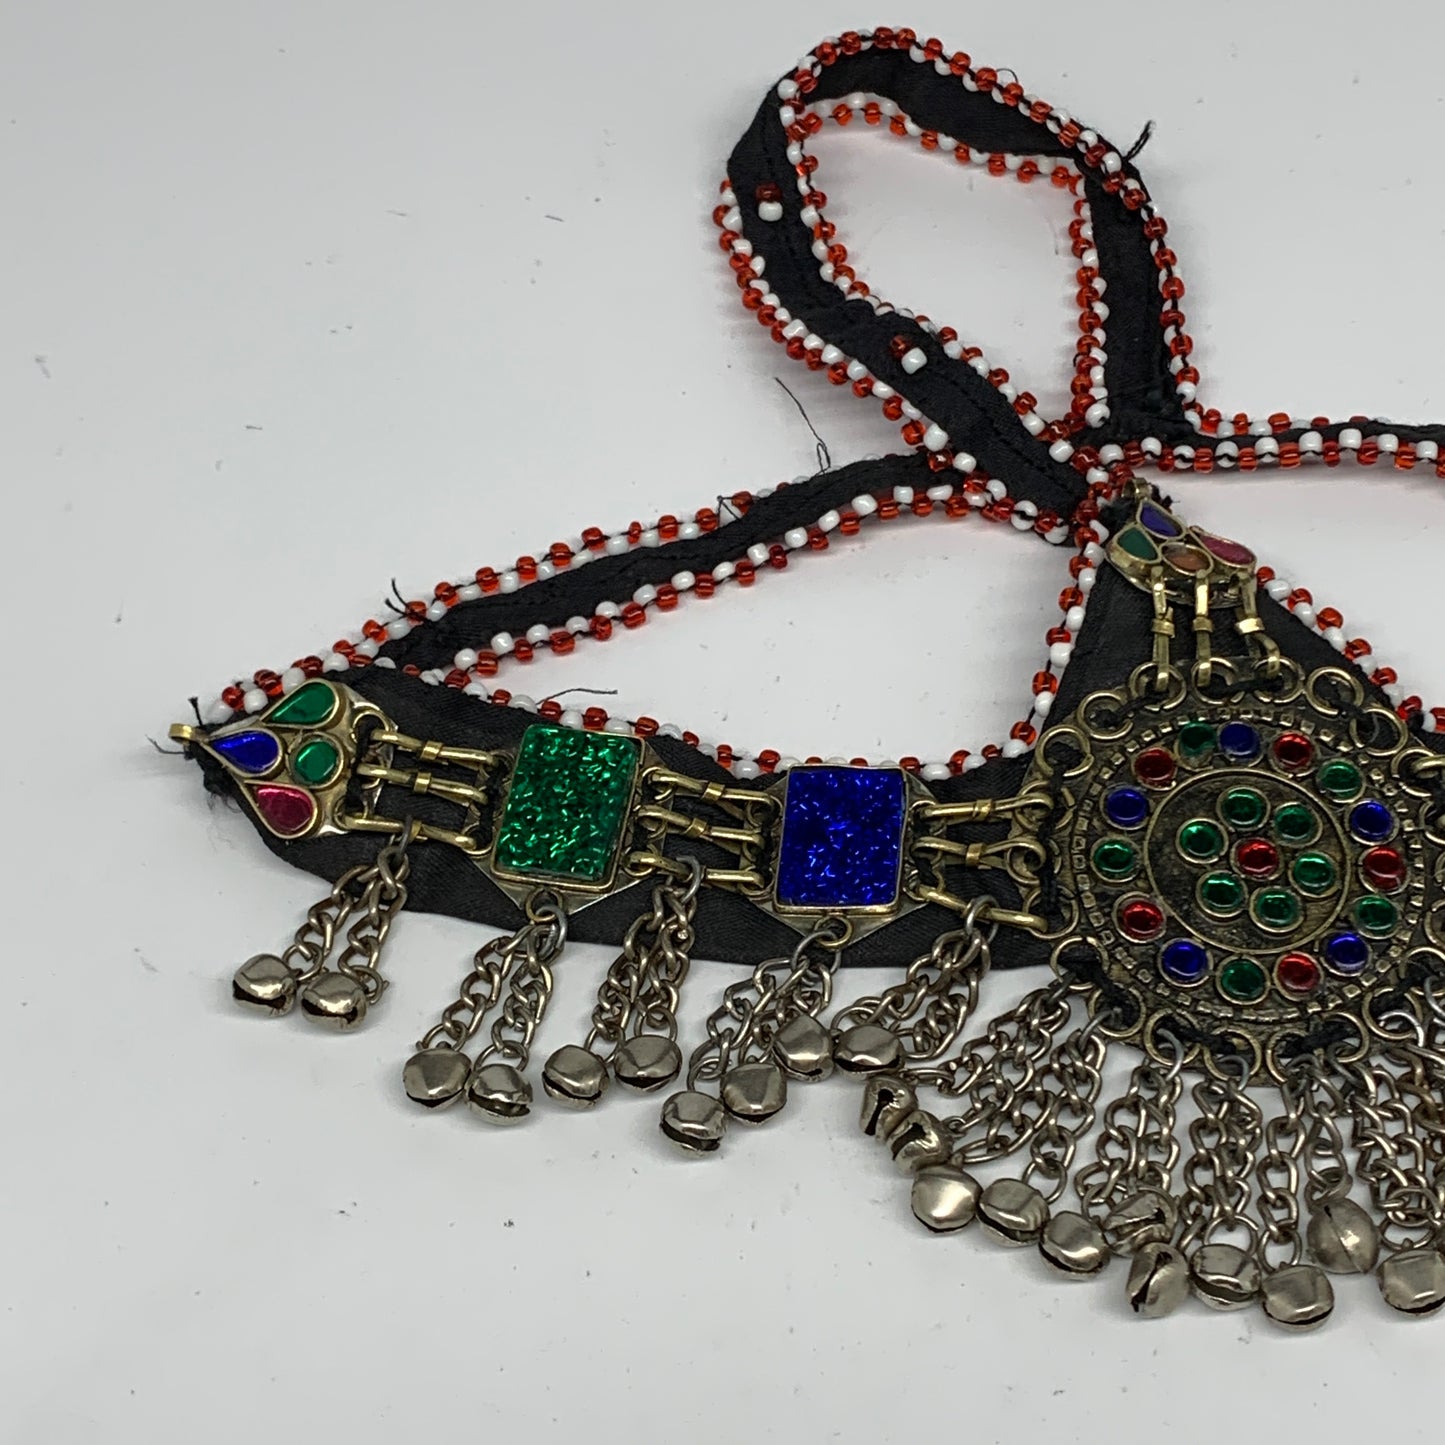 83.3g, Kuchi Headdress Headpiece Afghan Ethnic Tribal Jingle Bells @Afghanistan,